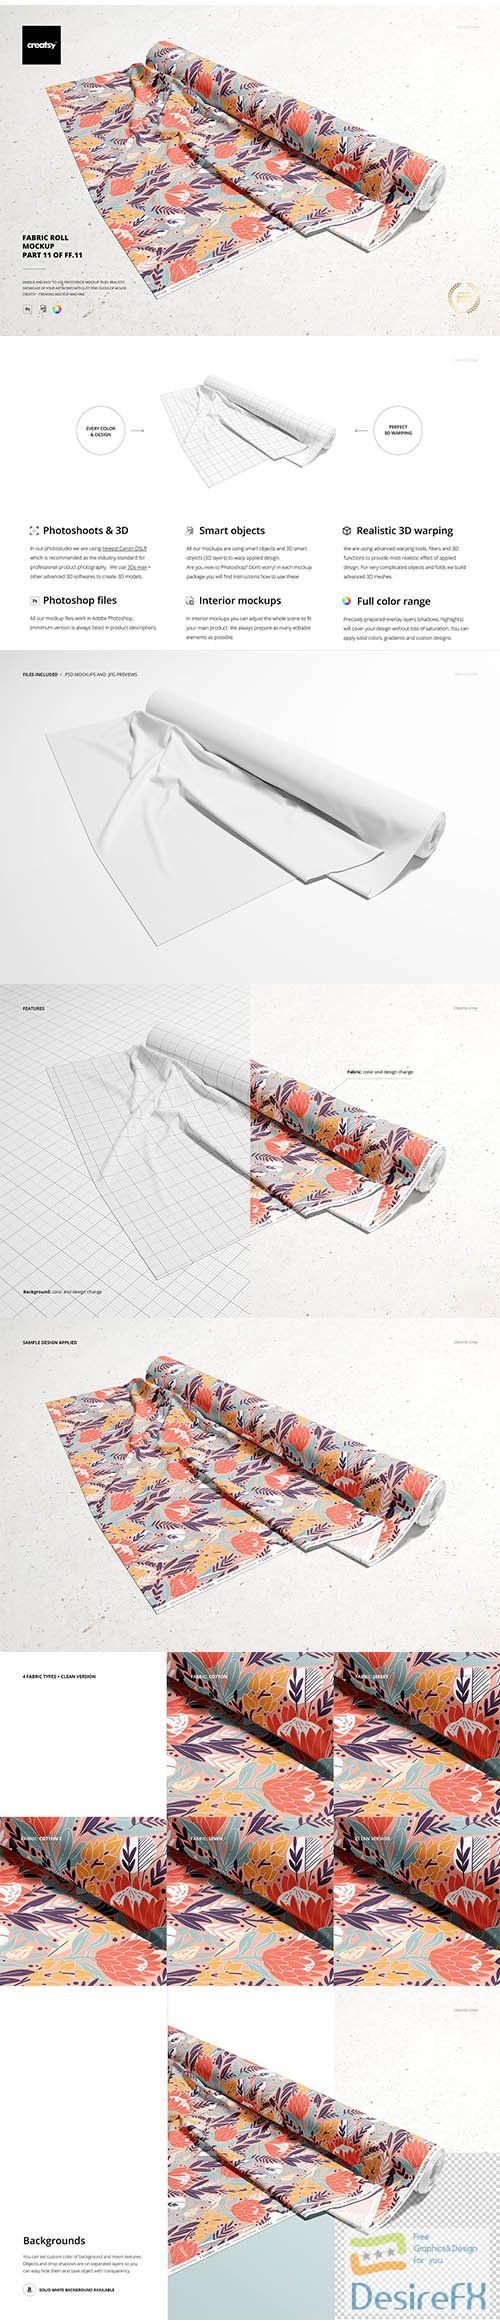 CreativeMarket - Fabric Roll Mockup 5723146